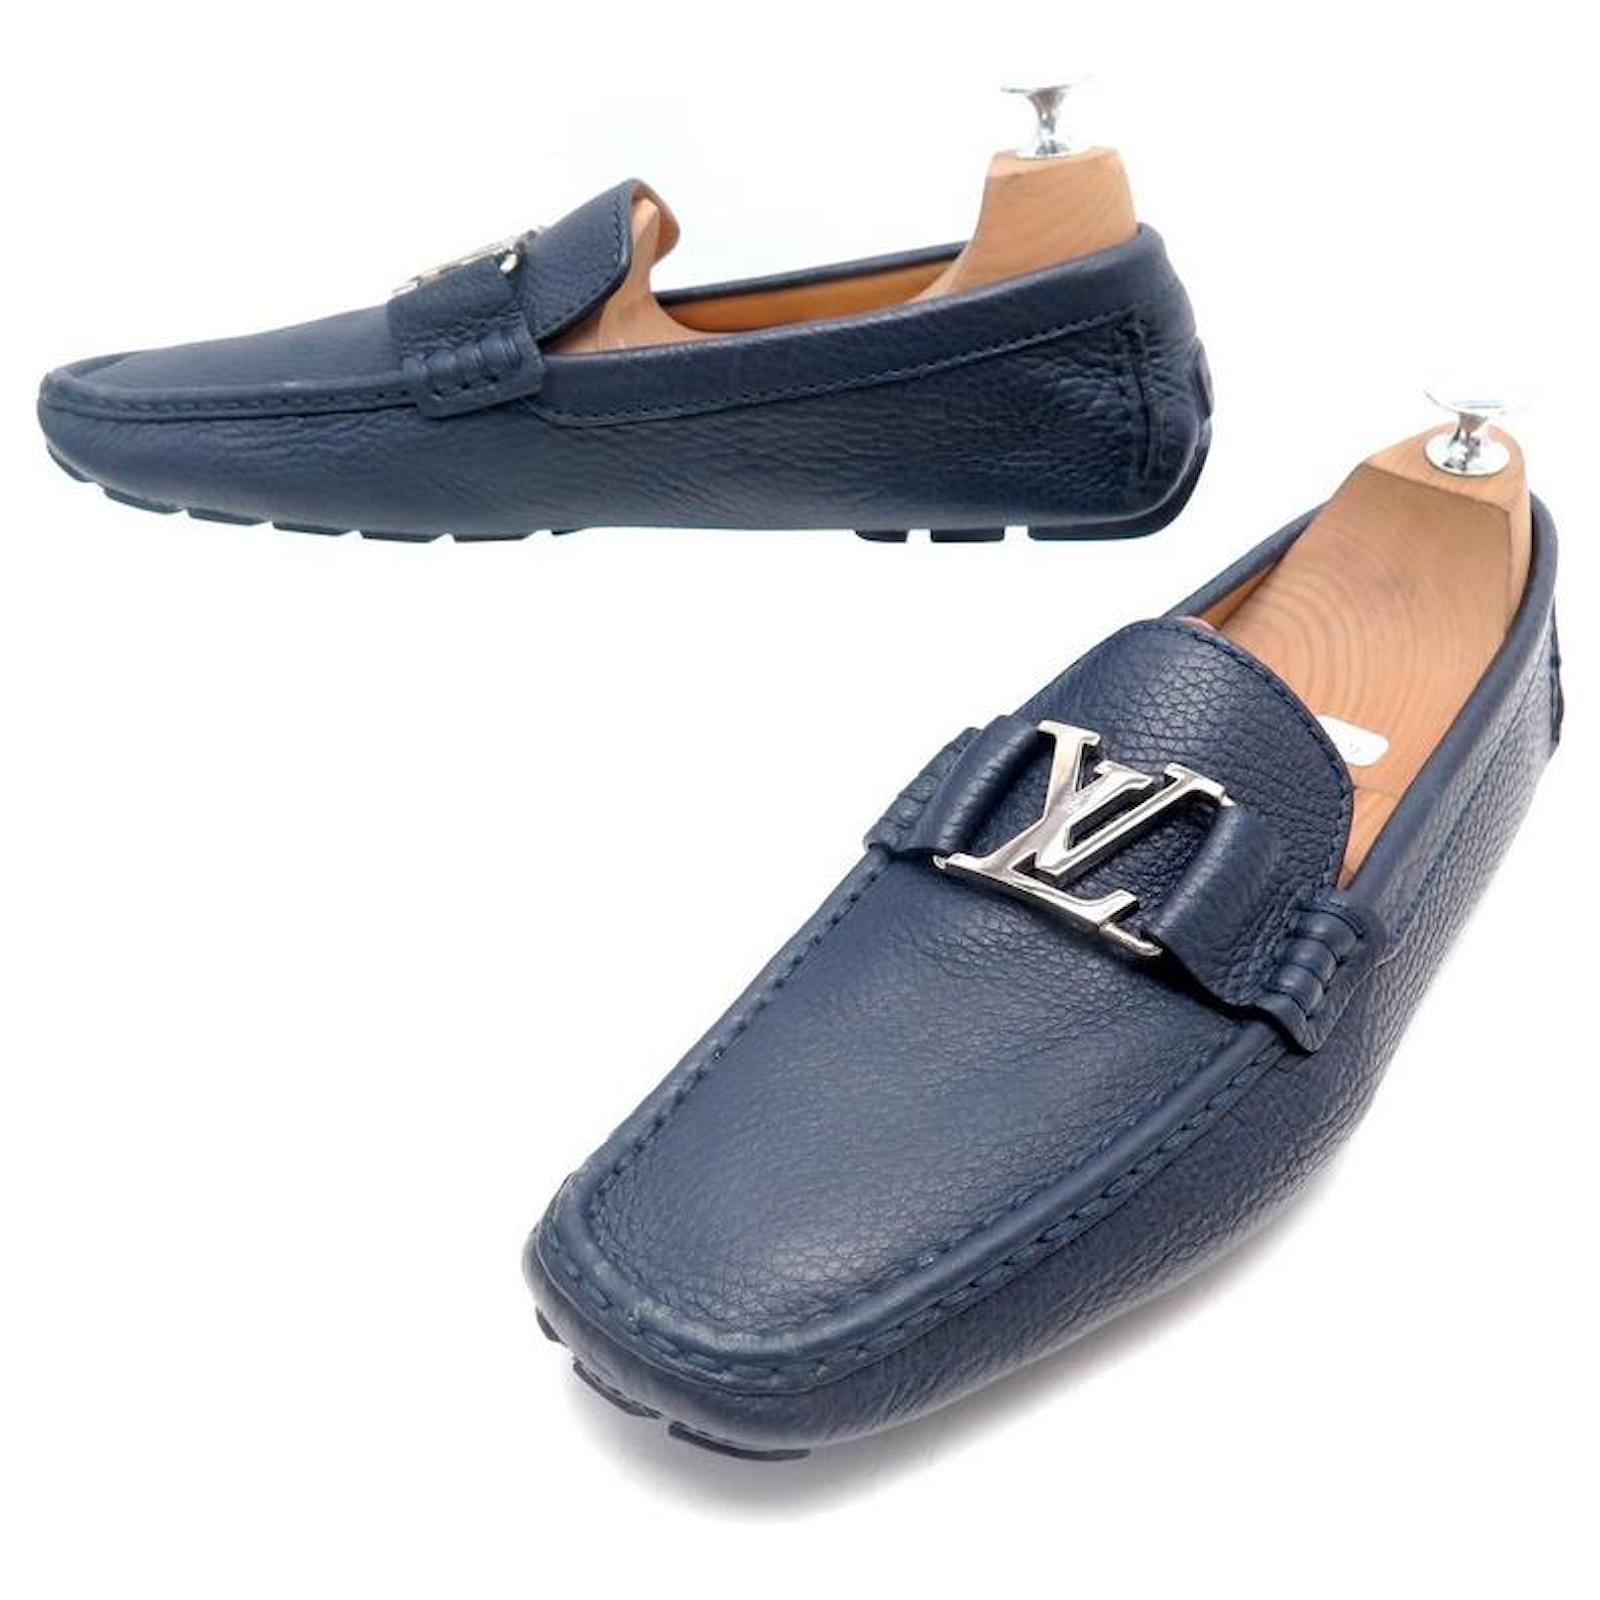  LOUIS STITCH Zapatos de monjes italianos azules